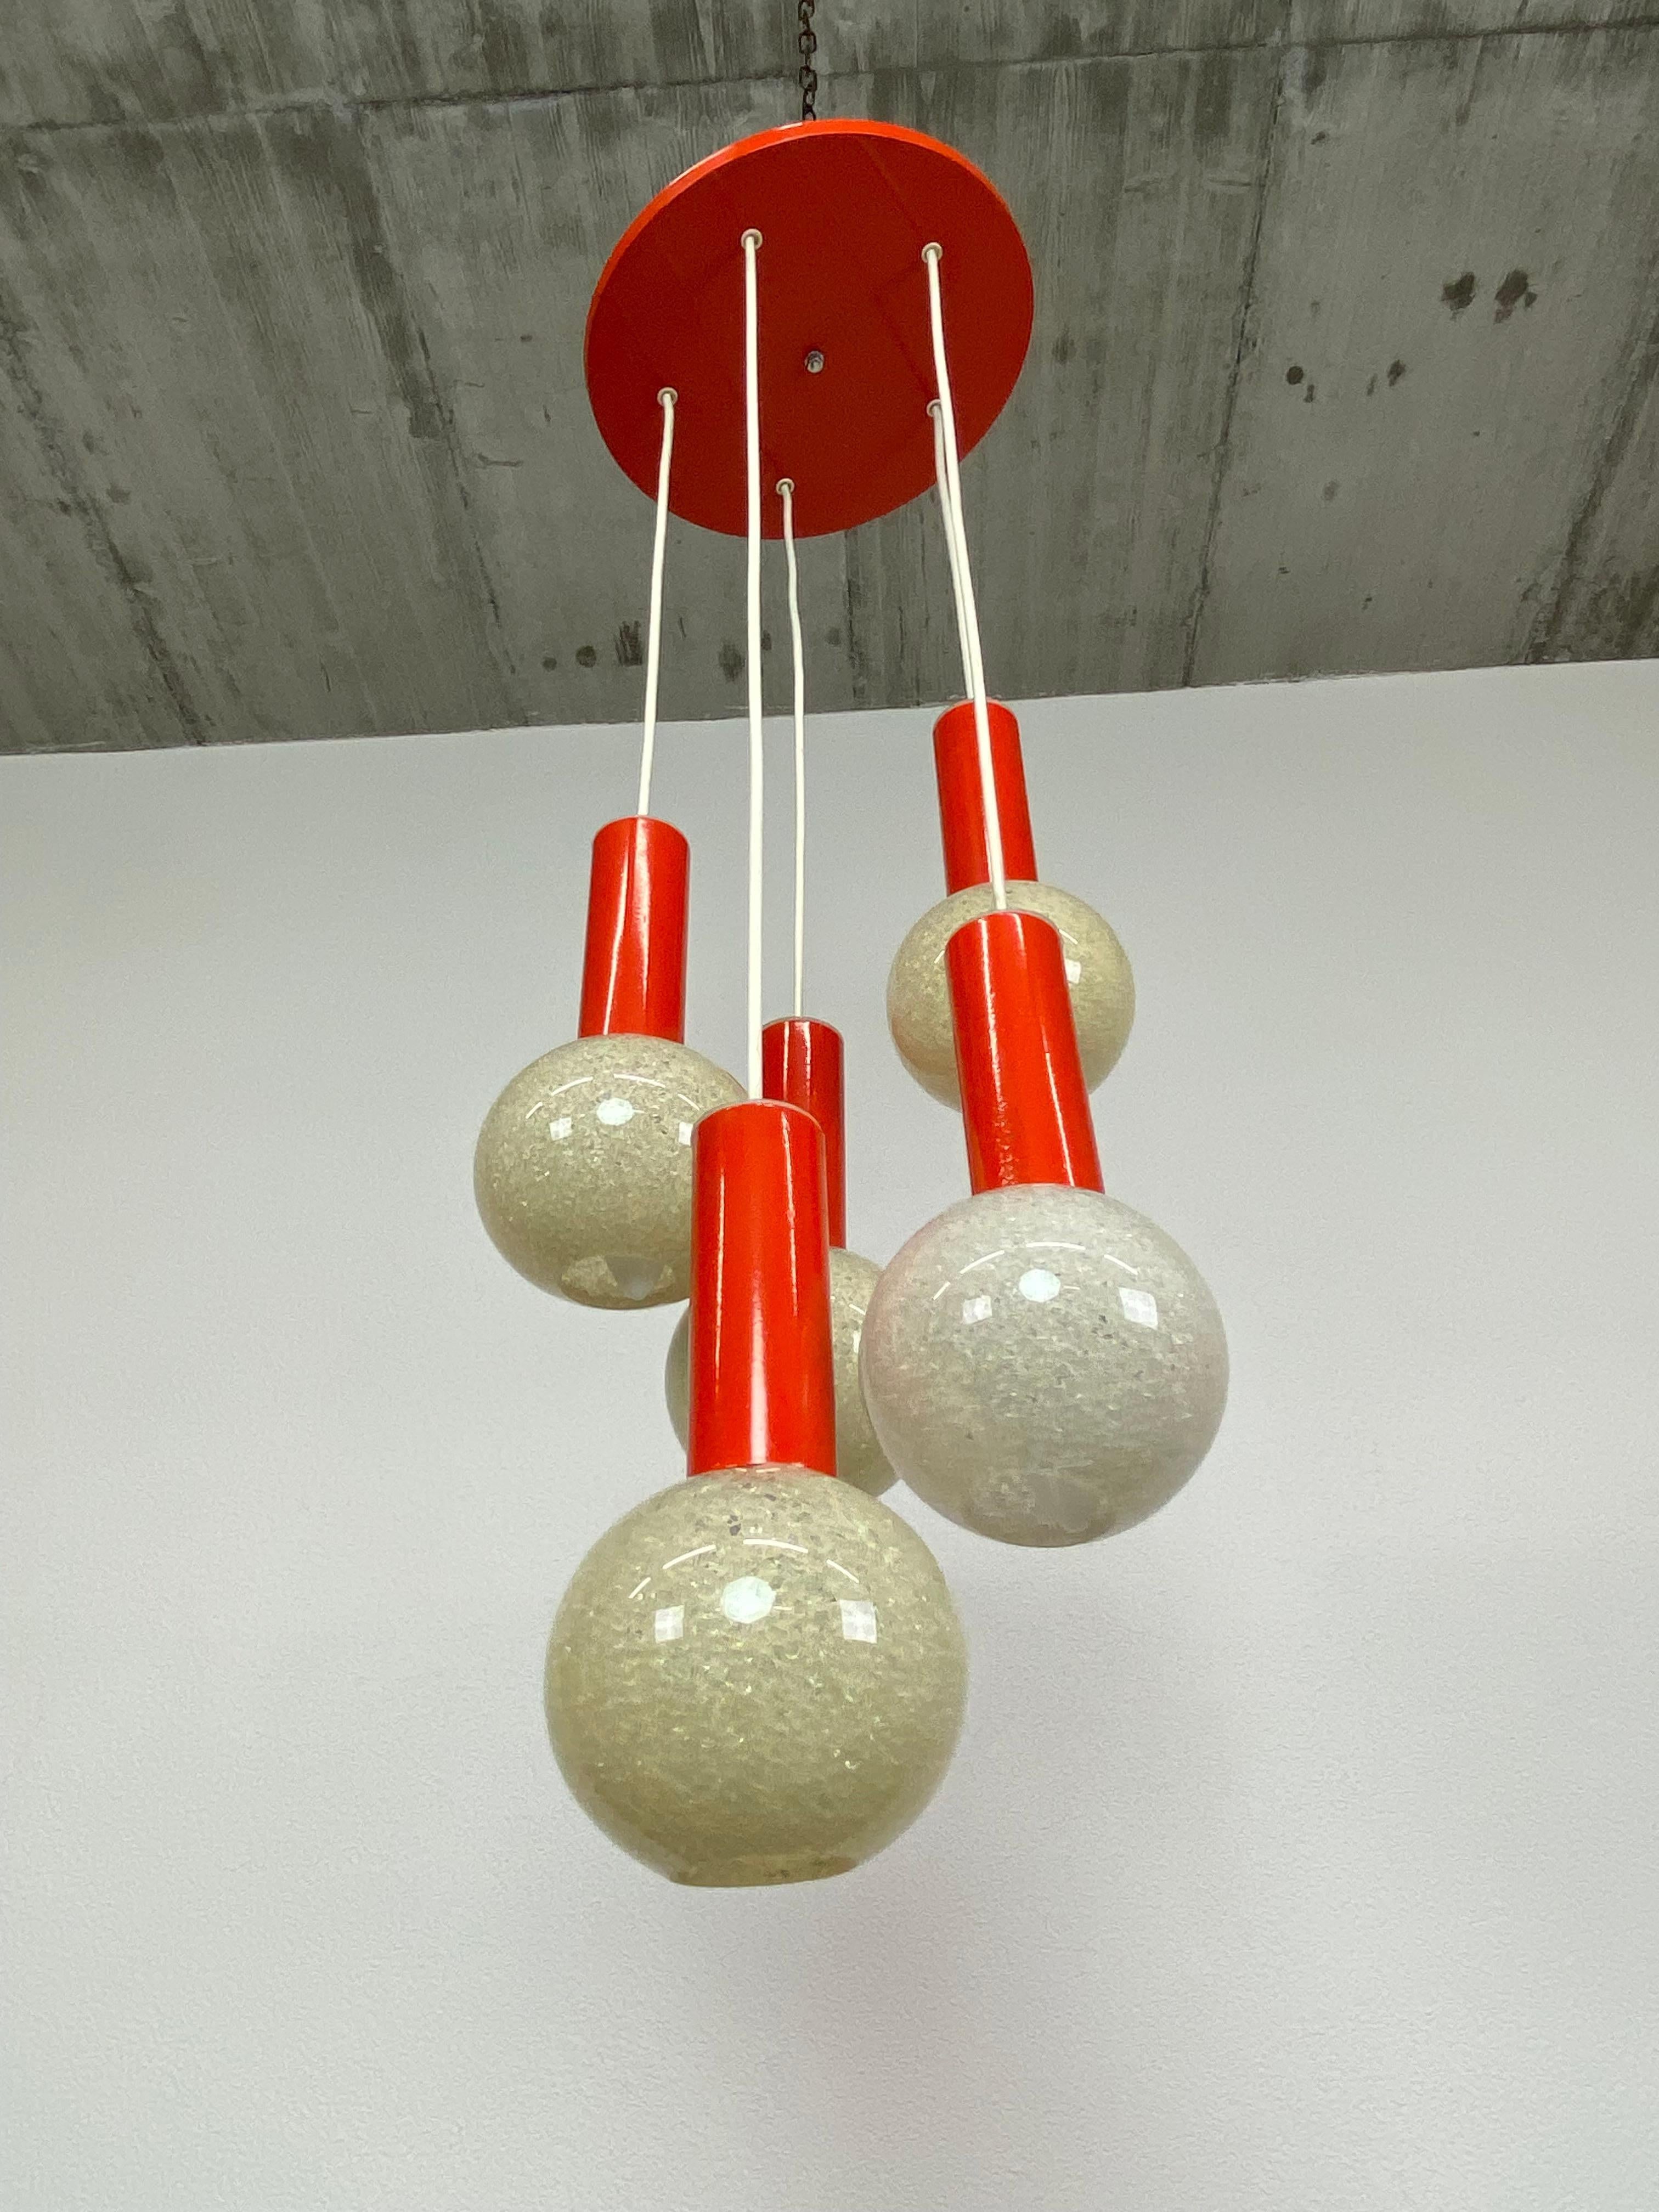 Orange midcentury modern hanging lamp with plastic lampshades.